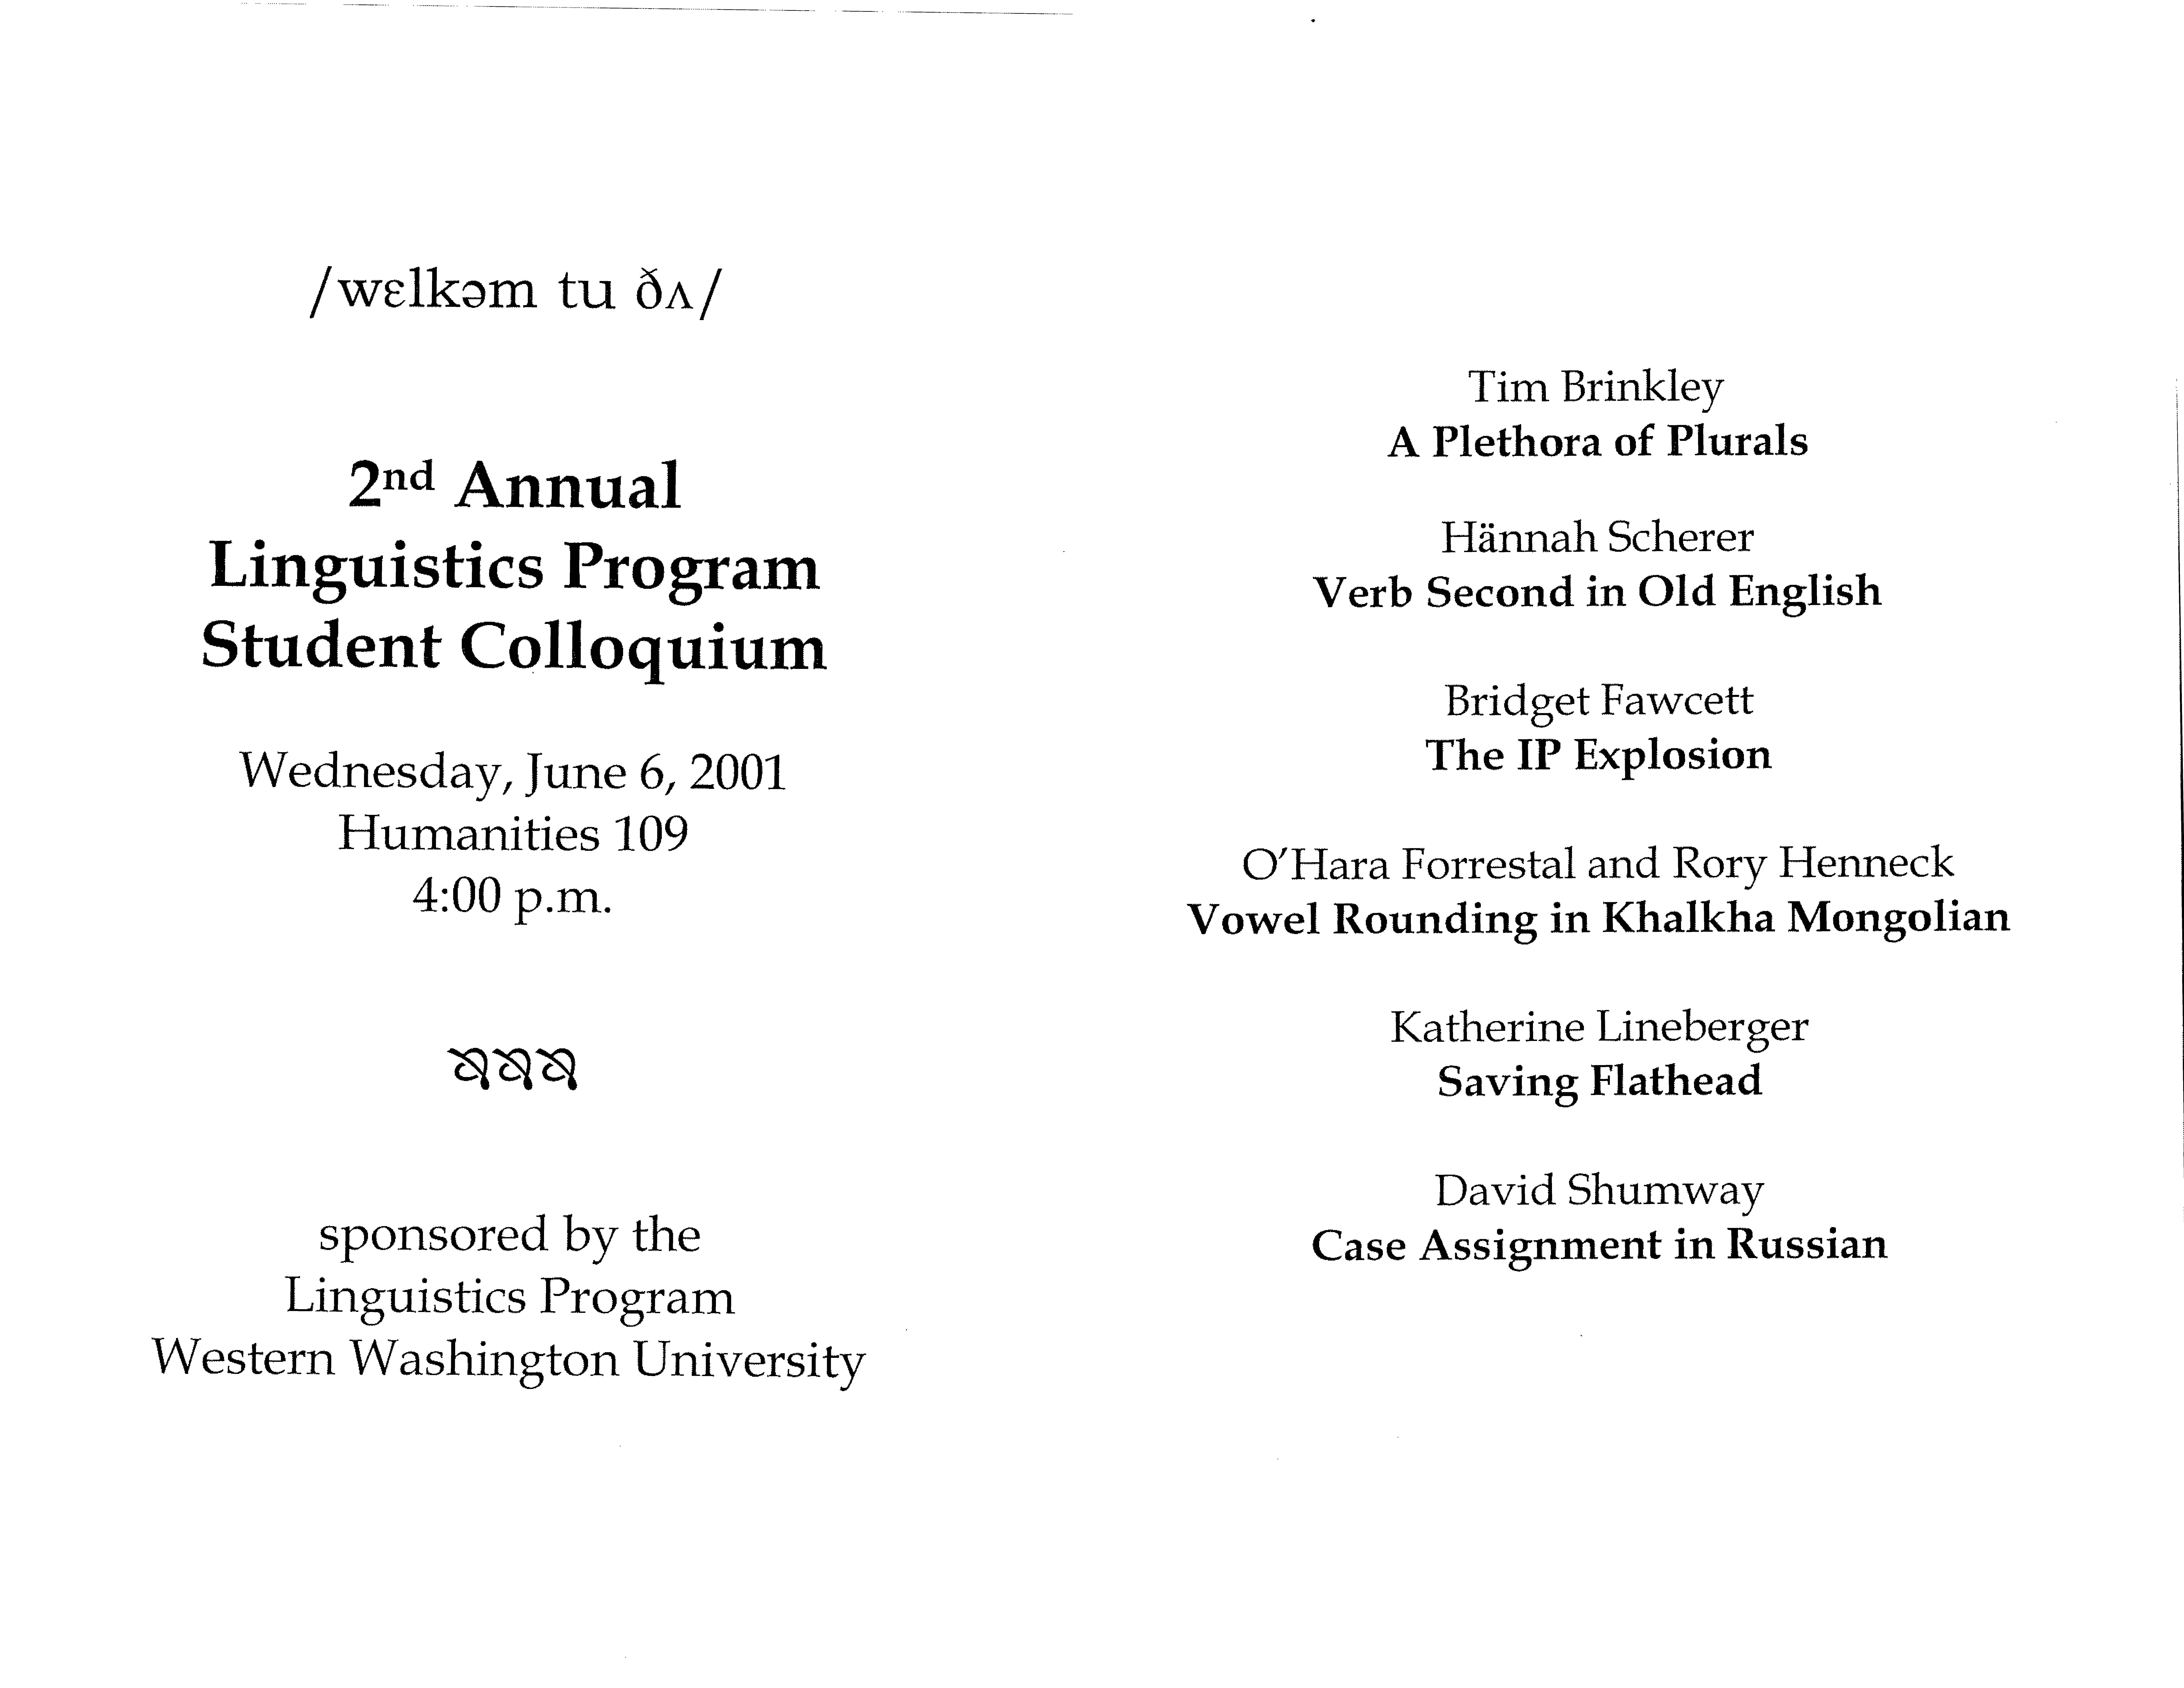 Program for June 6, 2001 Linguistics Program Student Colloquium. See webpage for details.